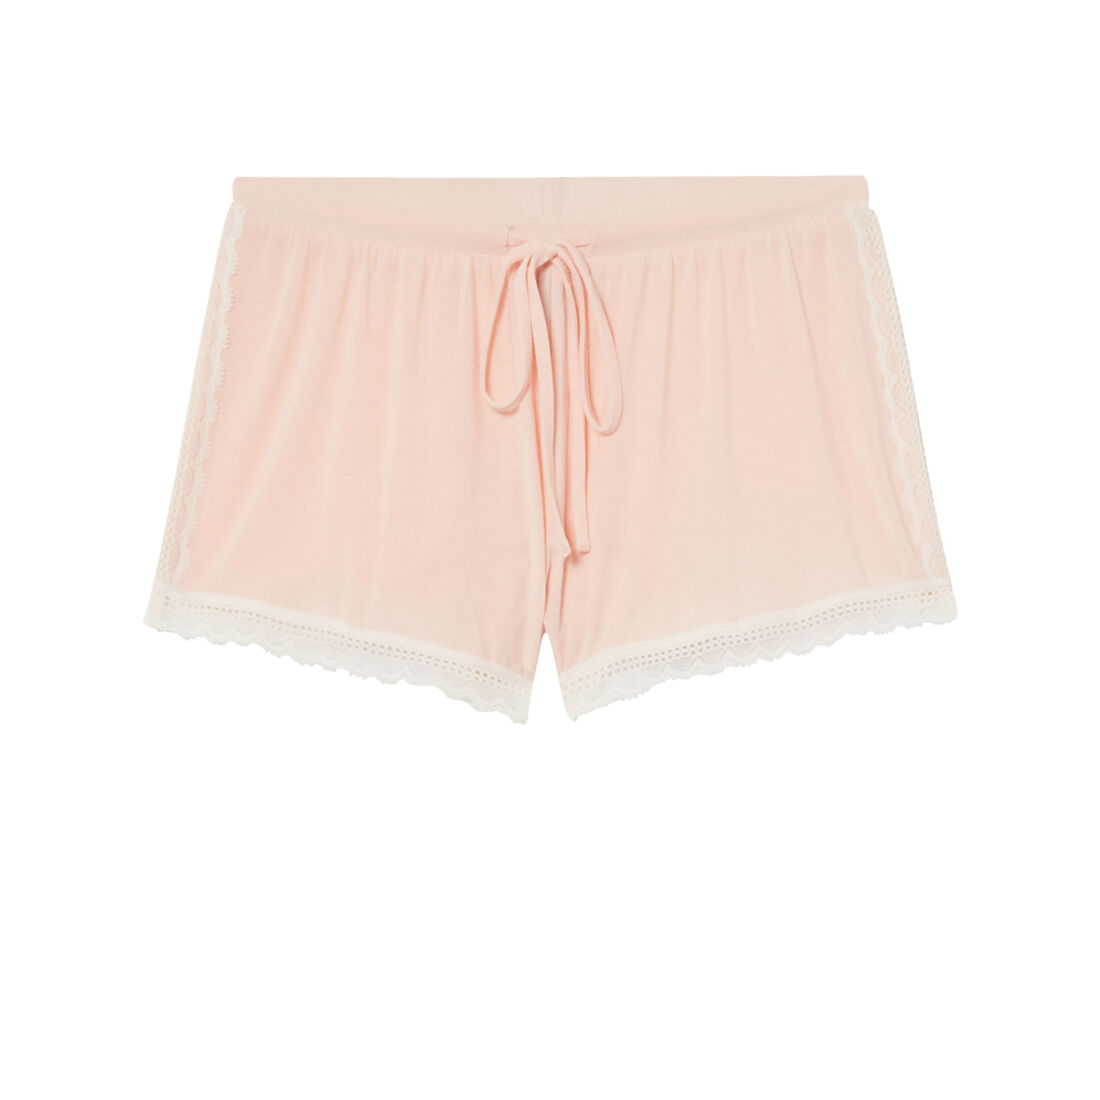 plain jersey shorts - pink;